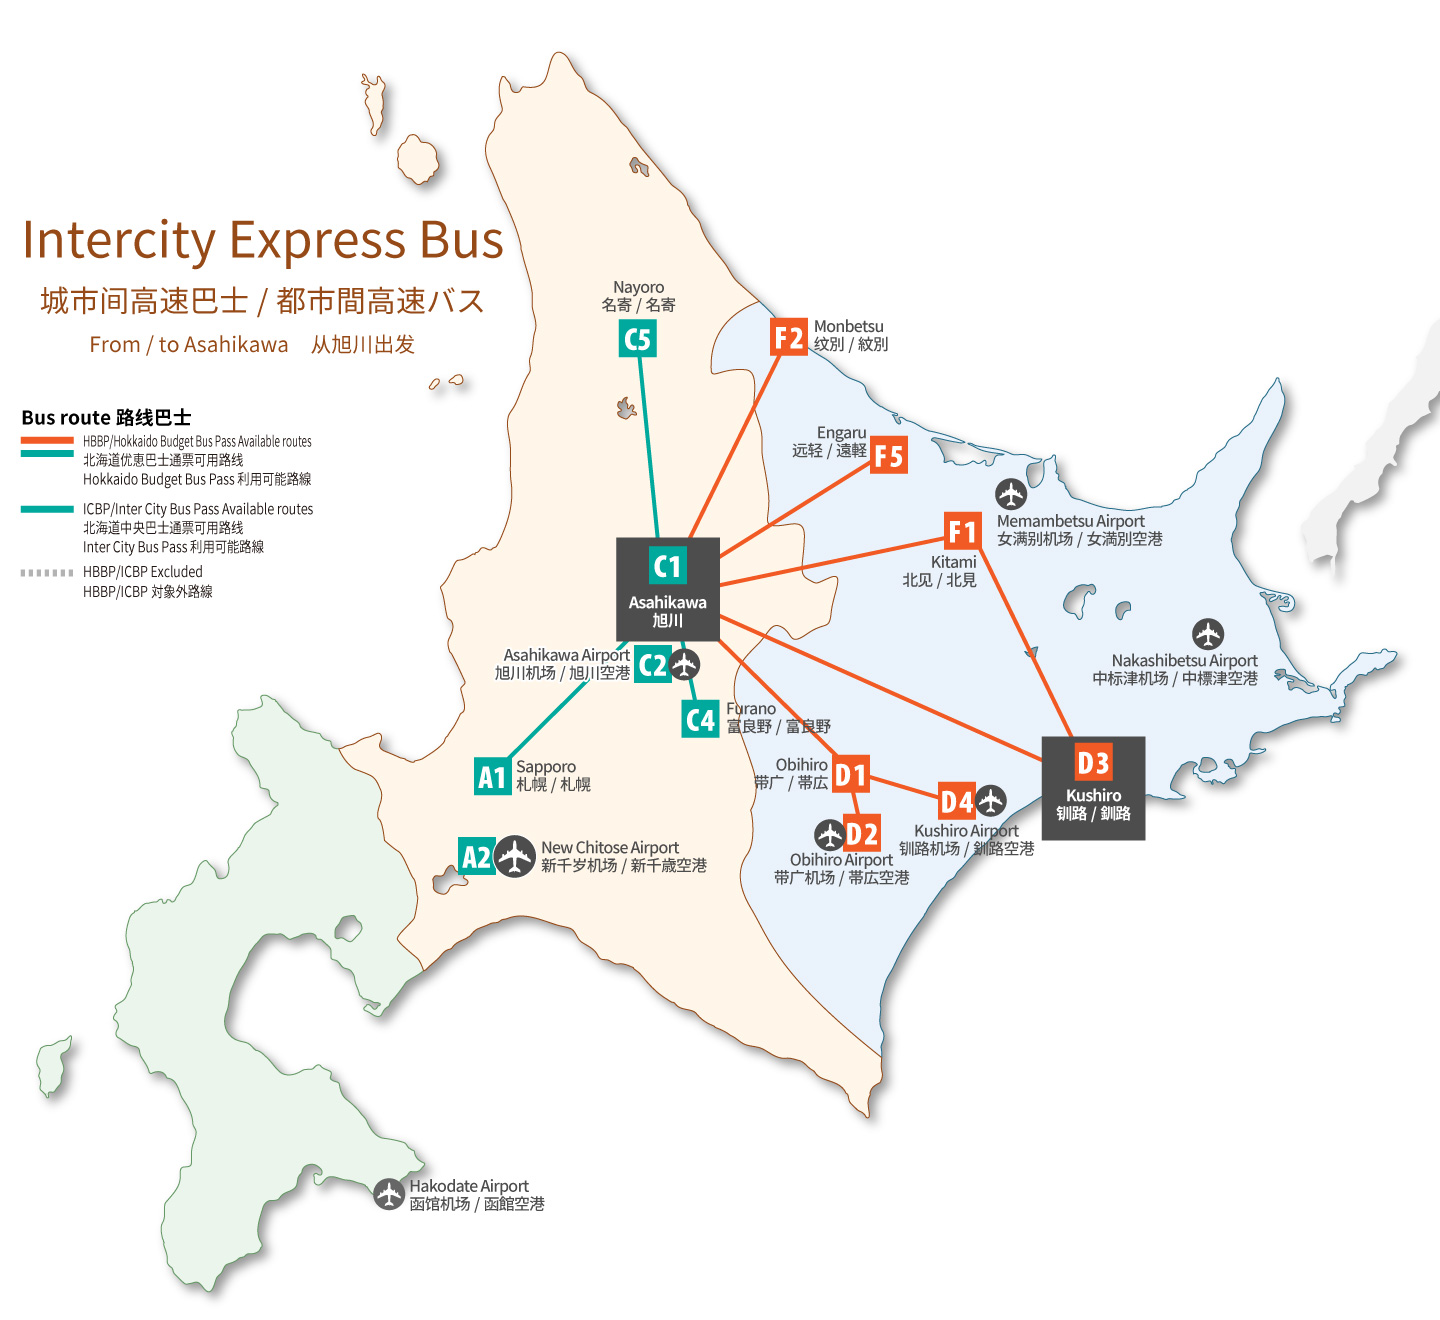 Intercity Express Bus